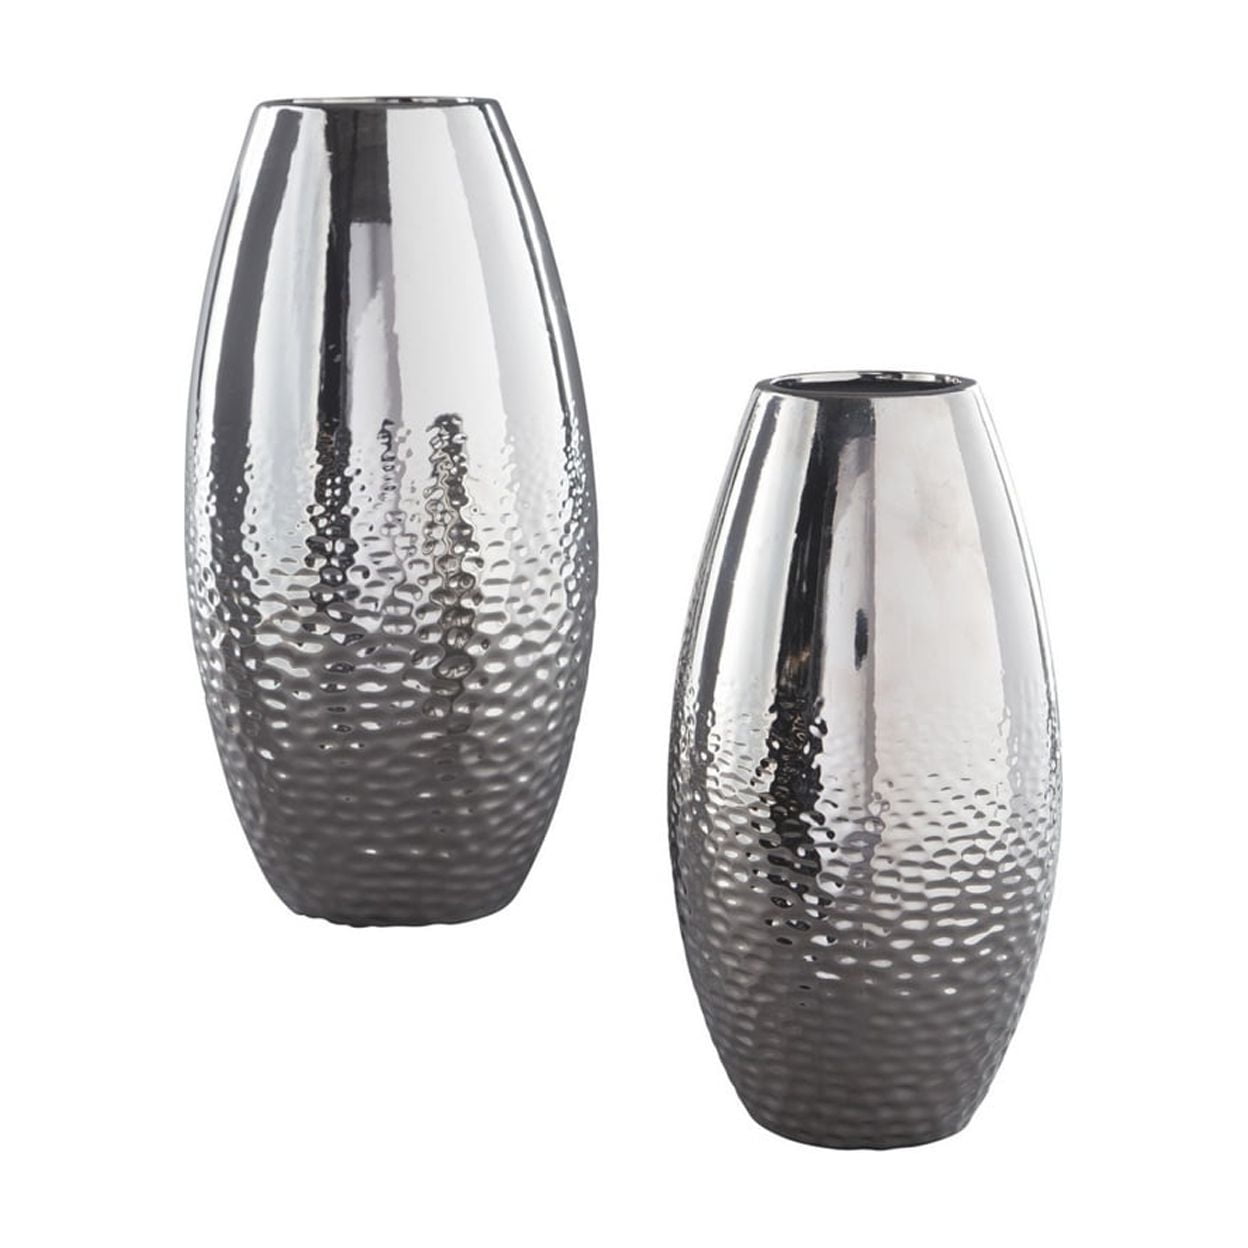 Picture of Benjara BM230970 Ceramic Vase with Textured Ripple Design, Silver - Set of 2